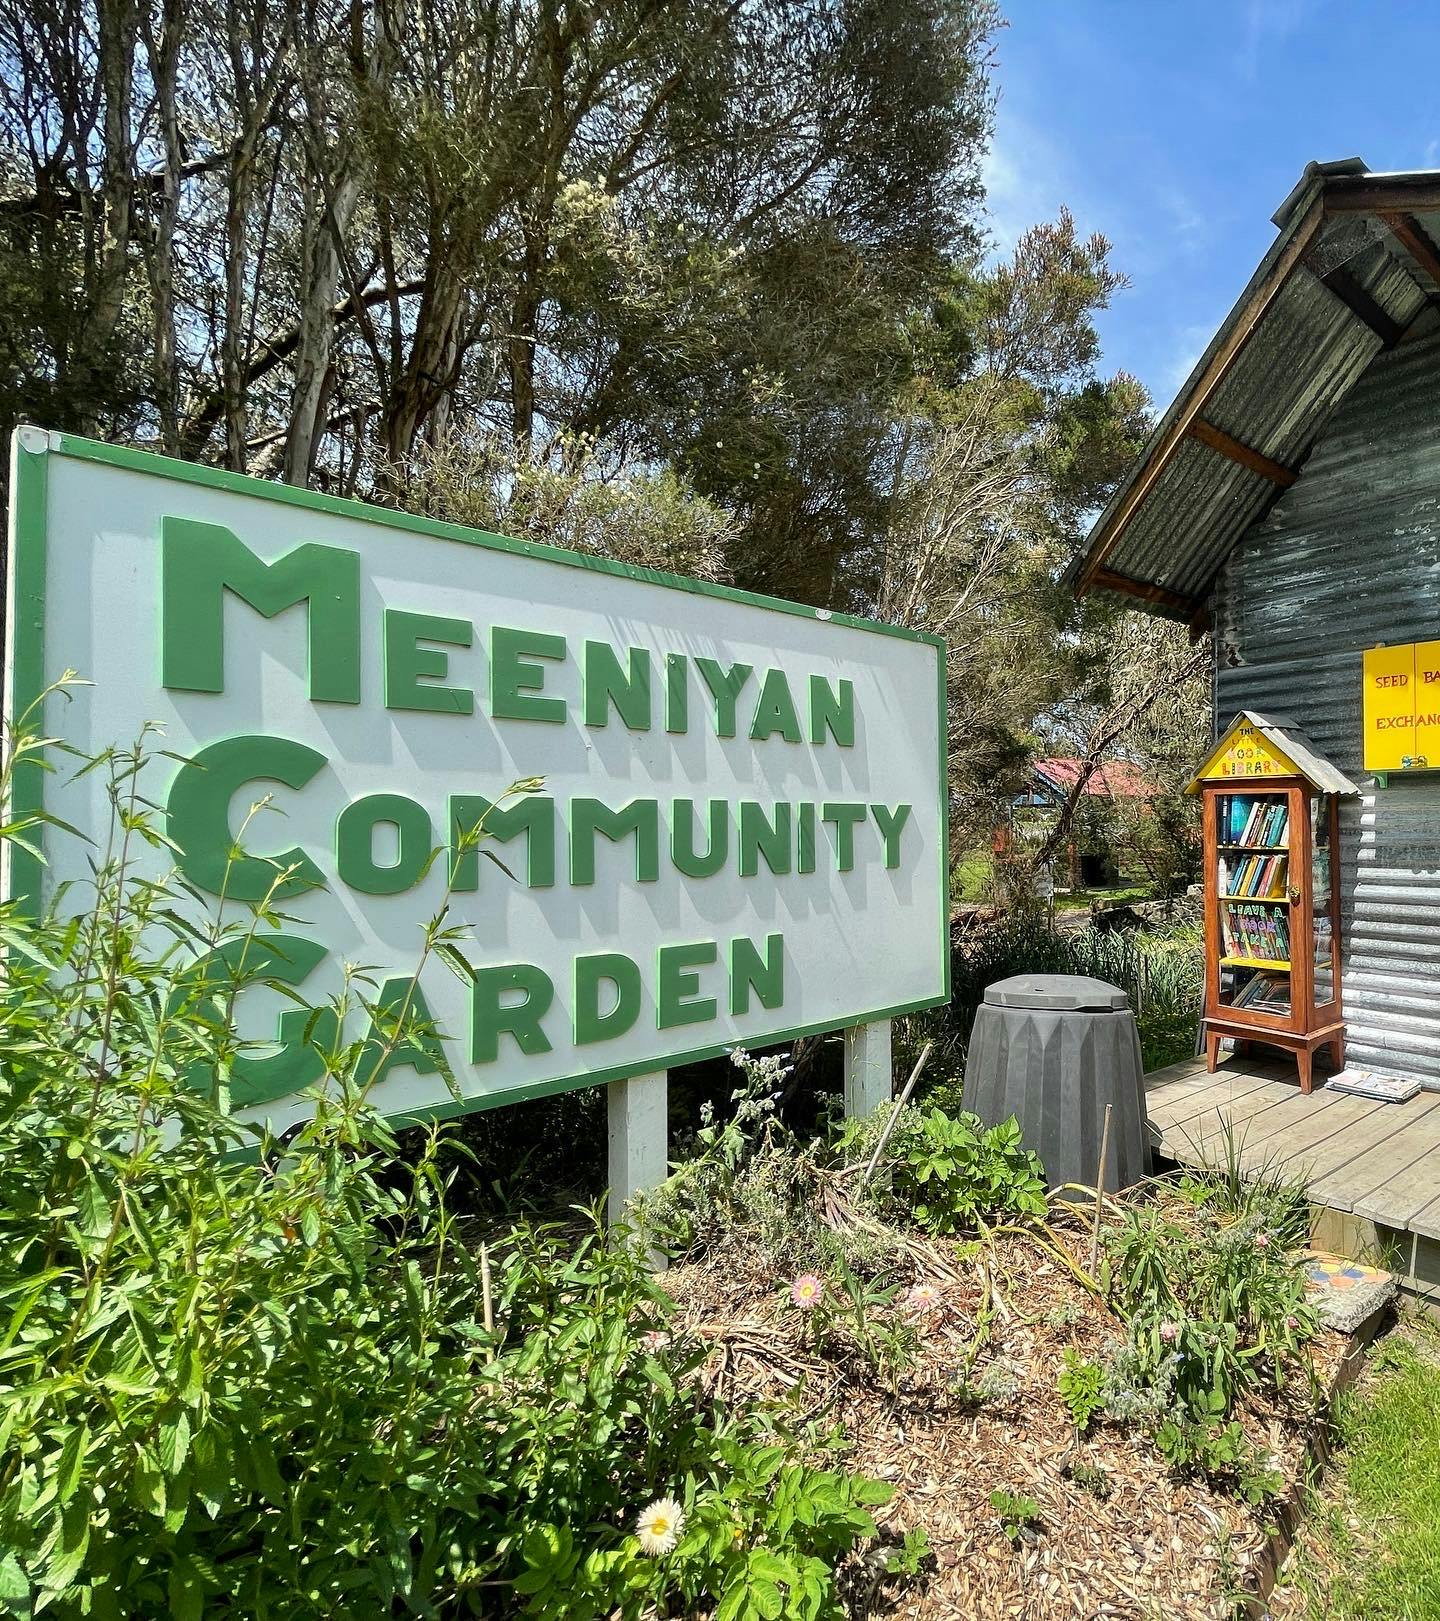 Meeniyan Community Garden